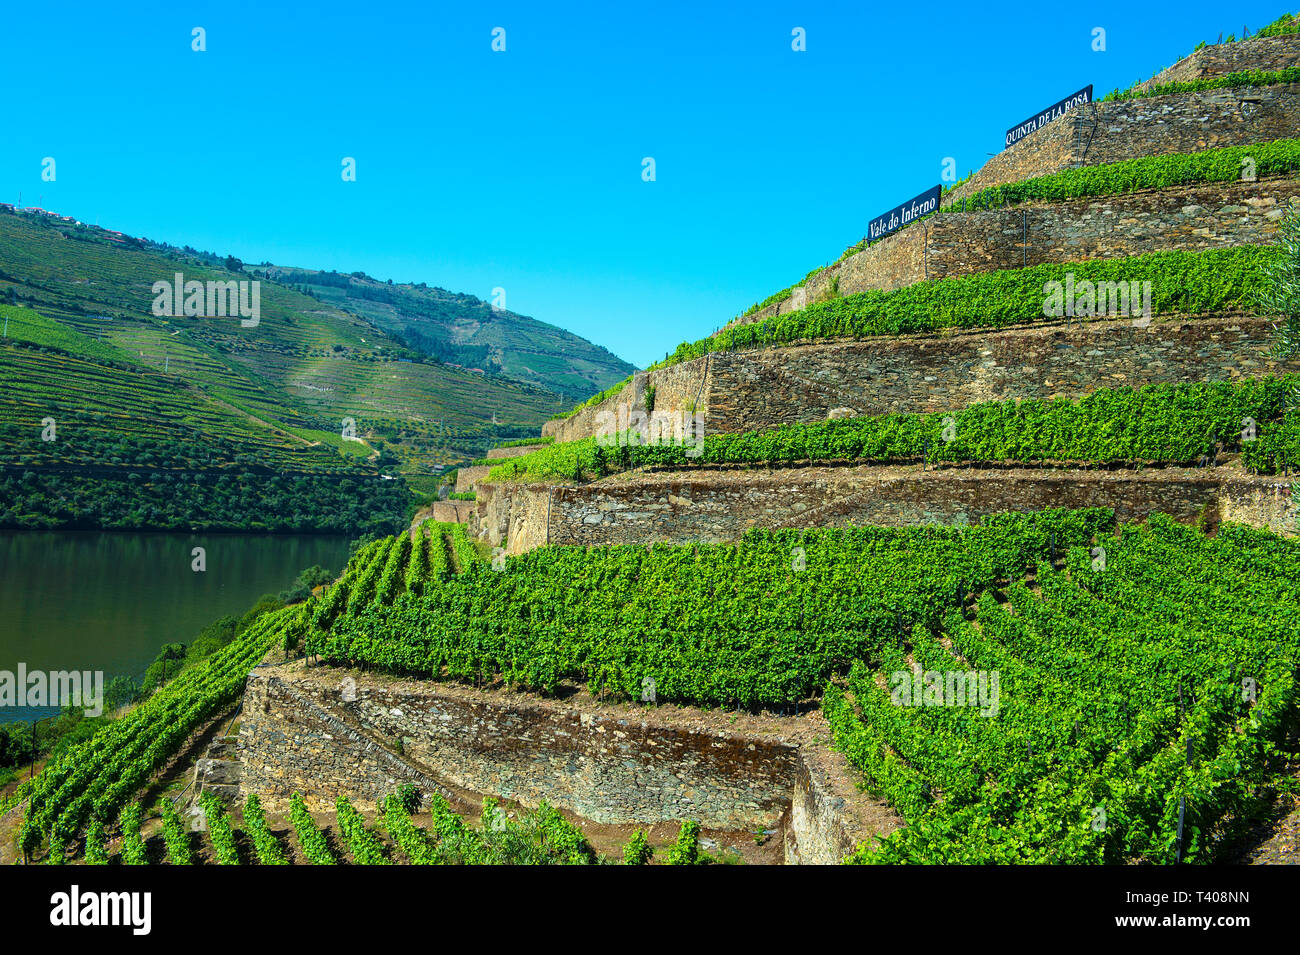 Im Weinberg Hölle Valley, Vale do Inferno, über dem Fluss Douro Weingut Quinta de la Rosa, Pinhao, Douro-tal, Portugal Stockfoto